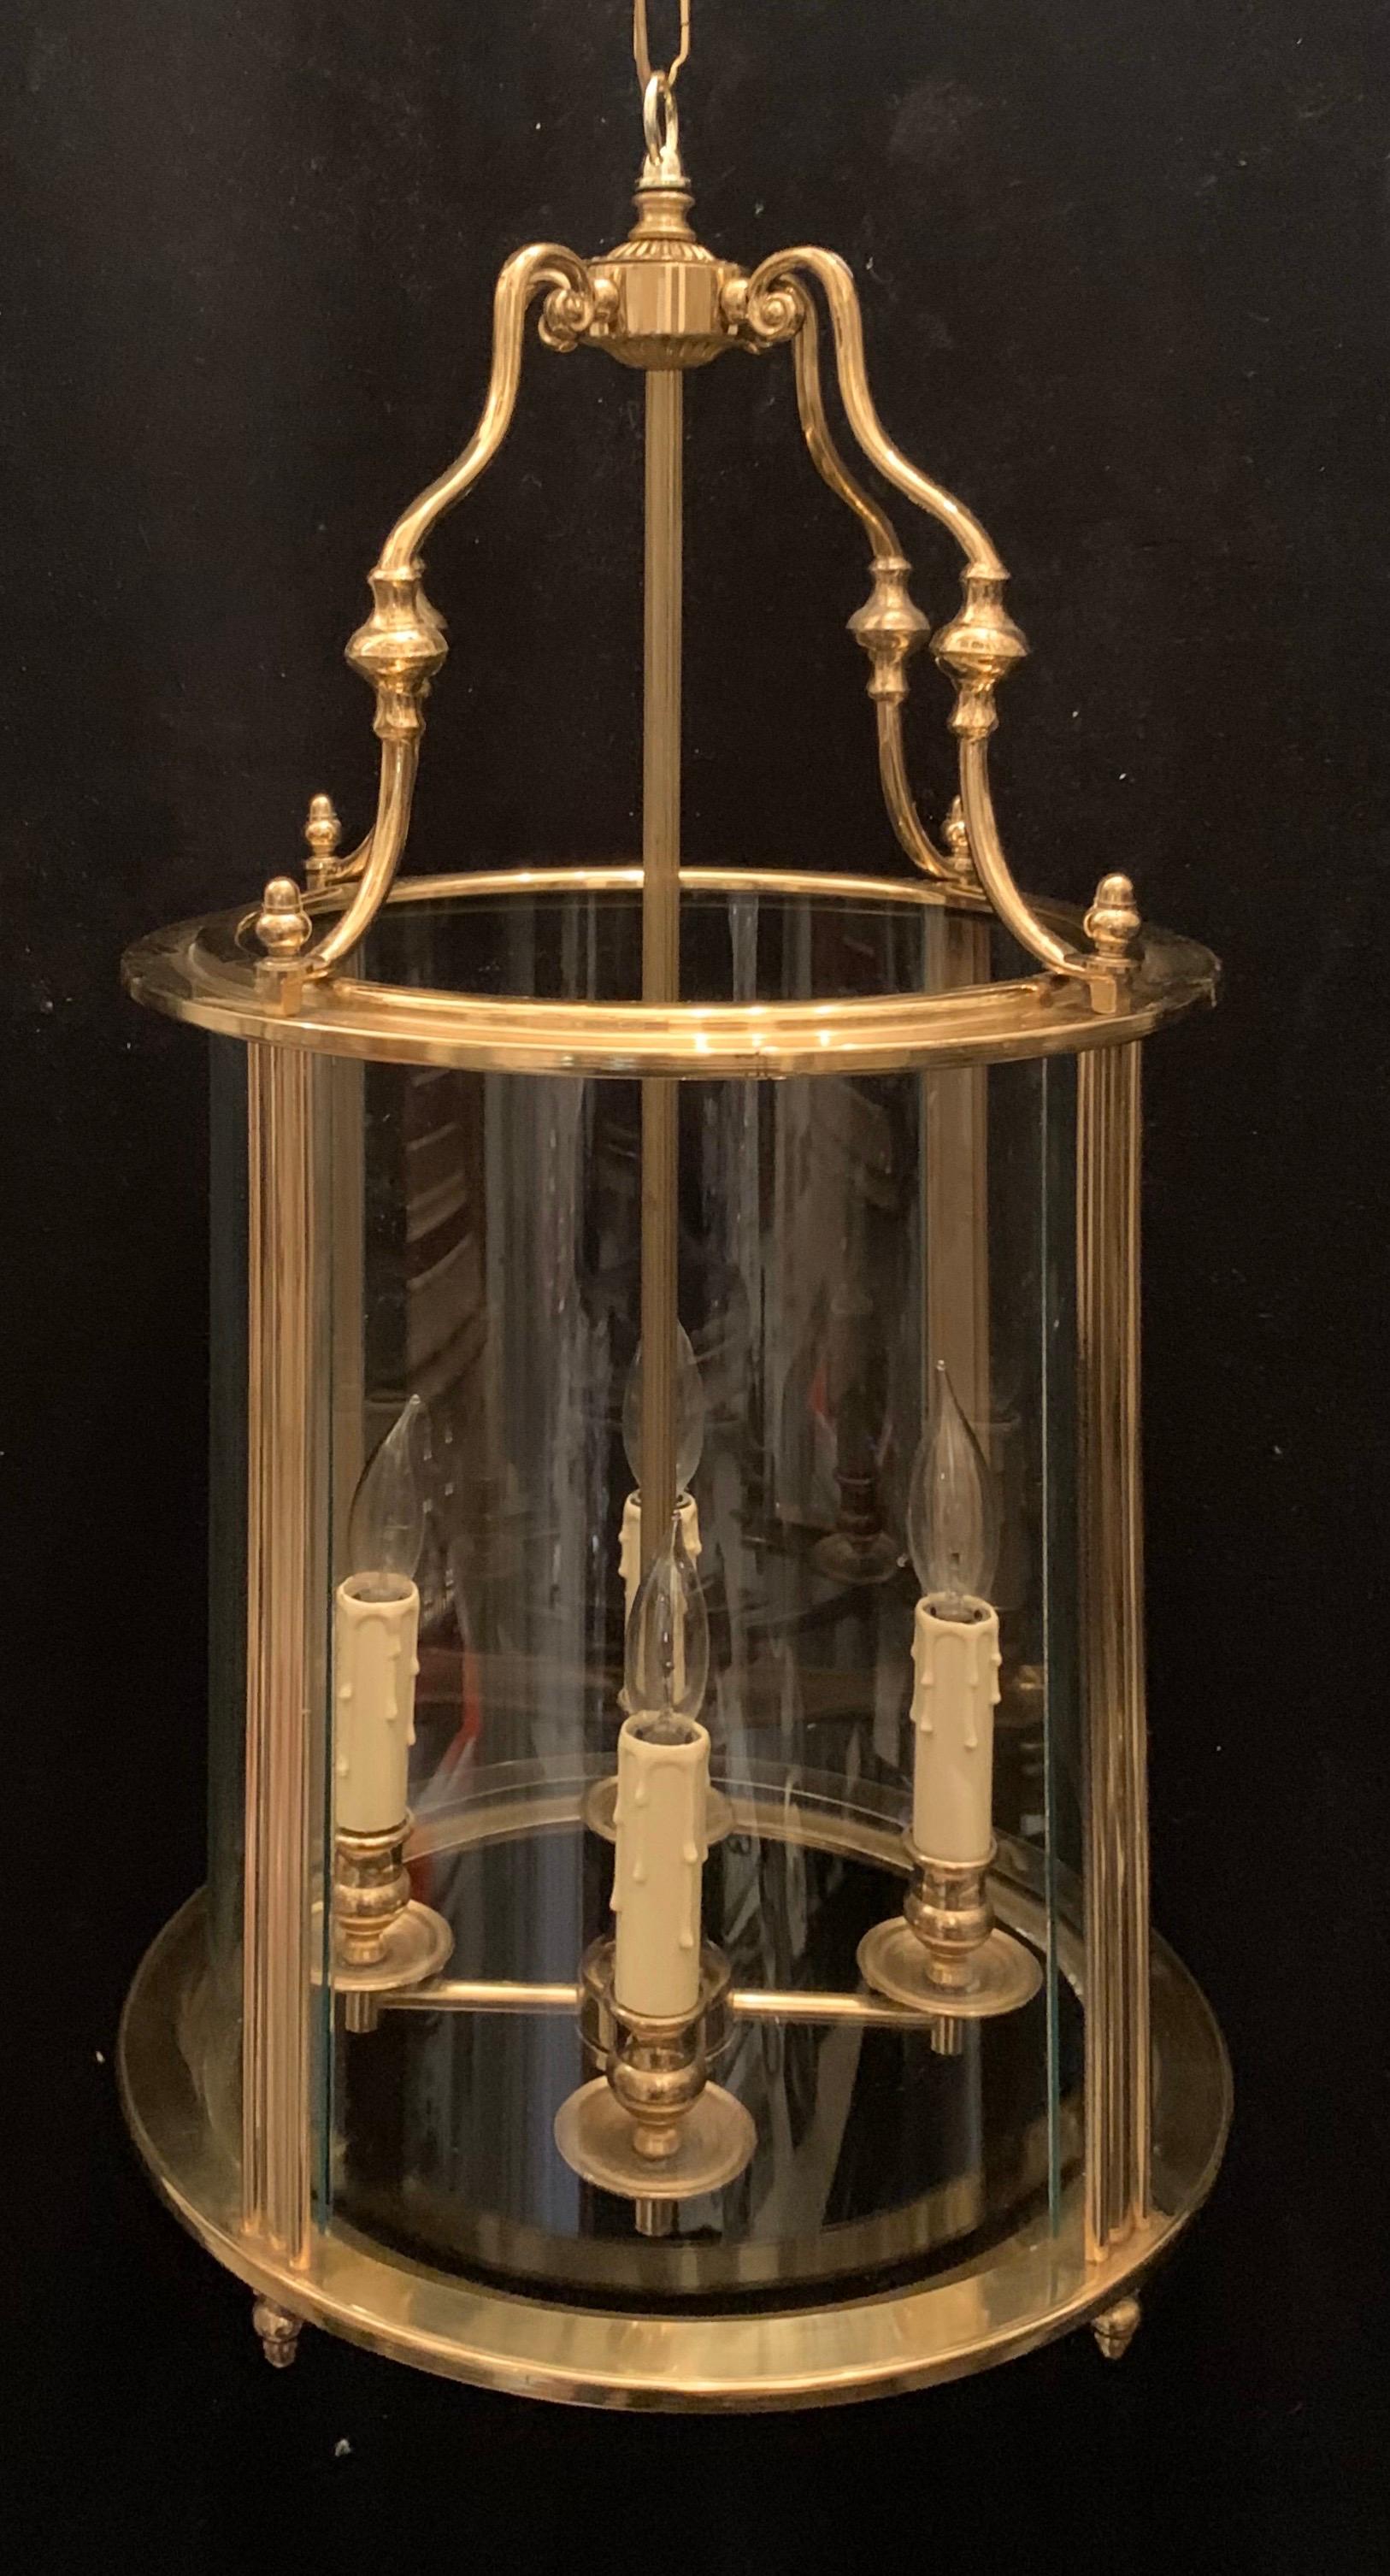 A wonderful Louis XVI / Georgian style brass & curved glass lantern circular light fixture pendent each with 4 candelabra lights.